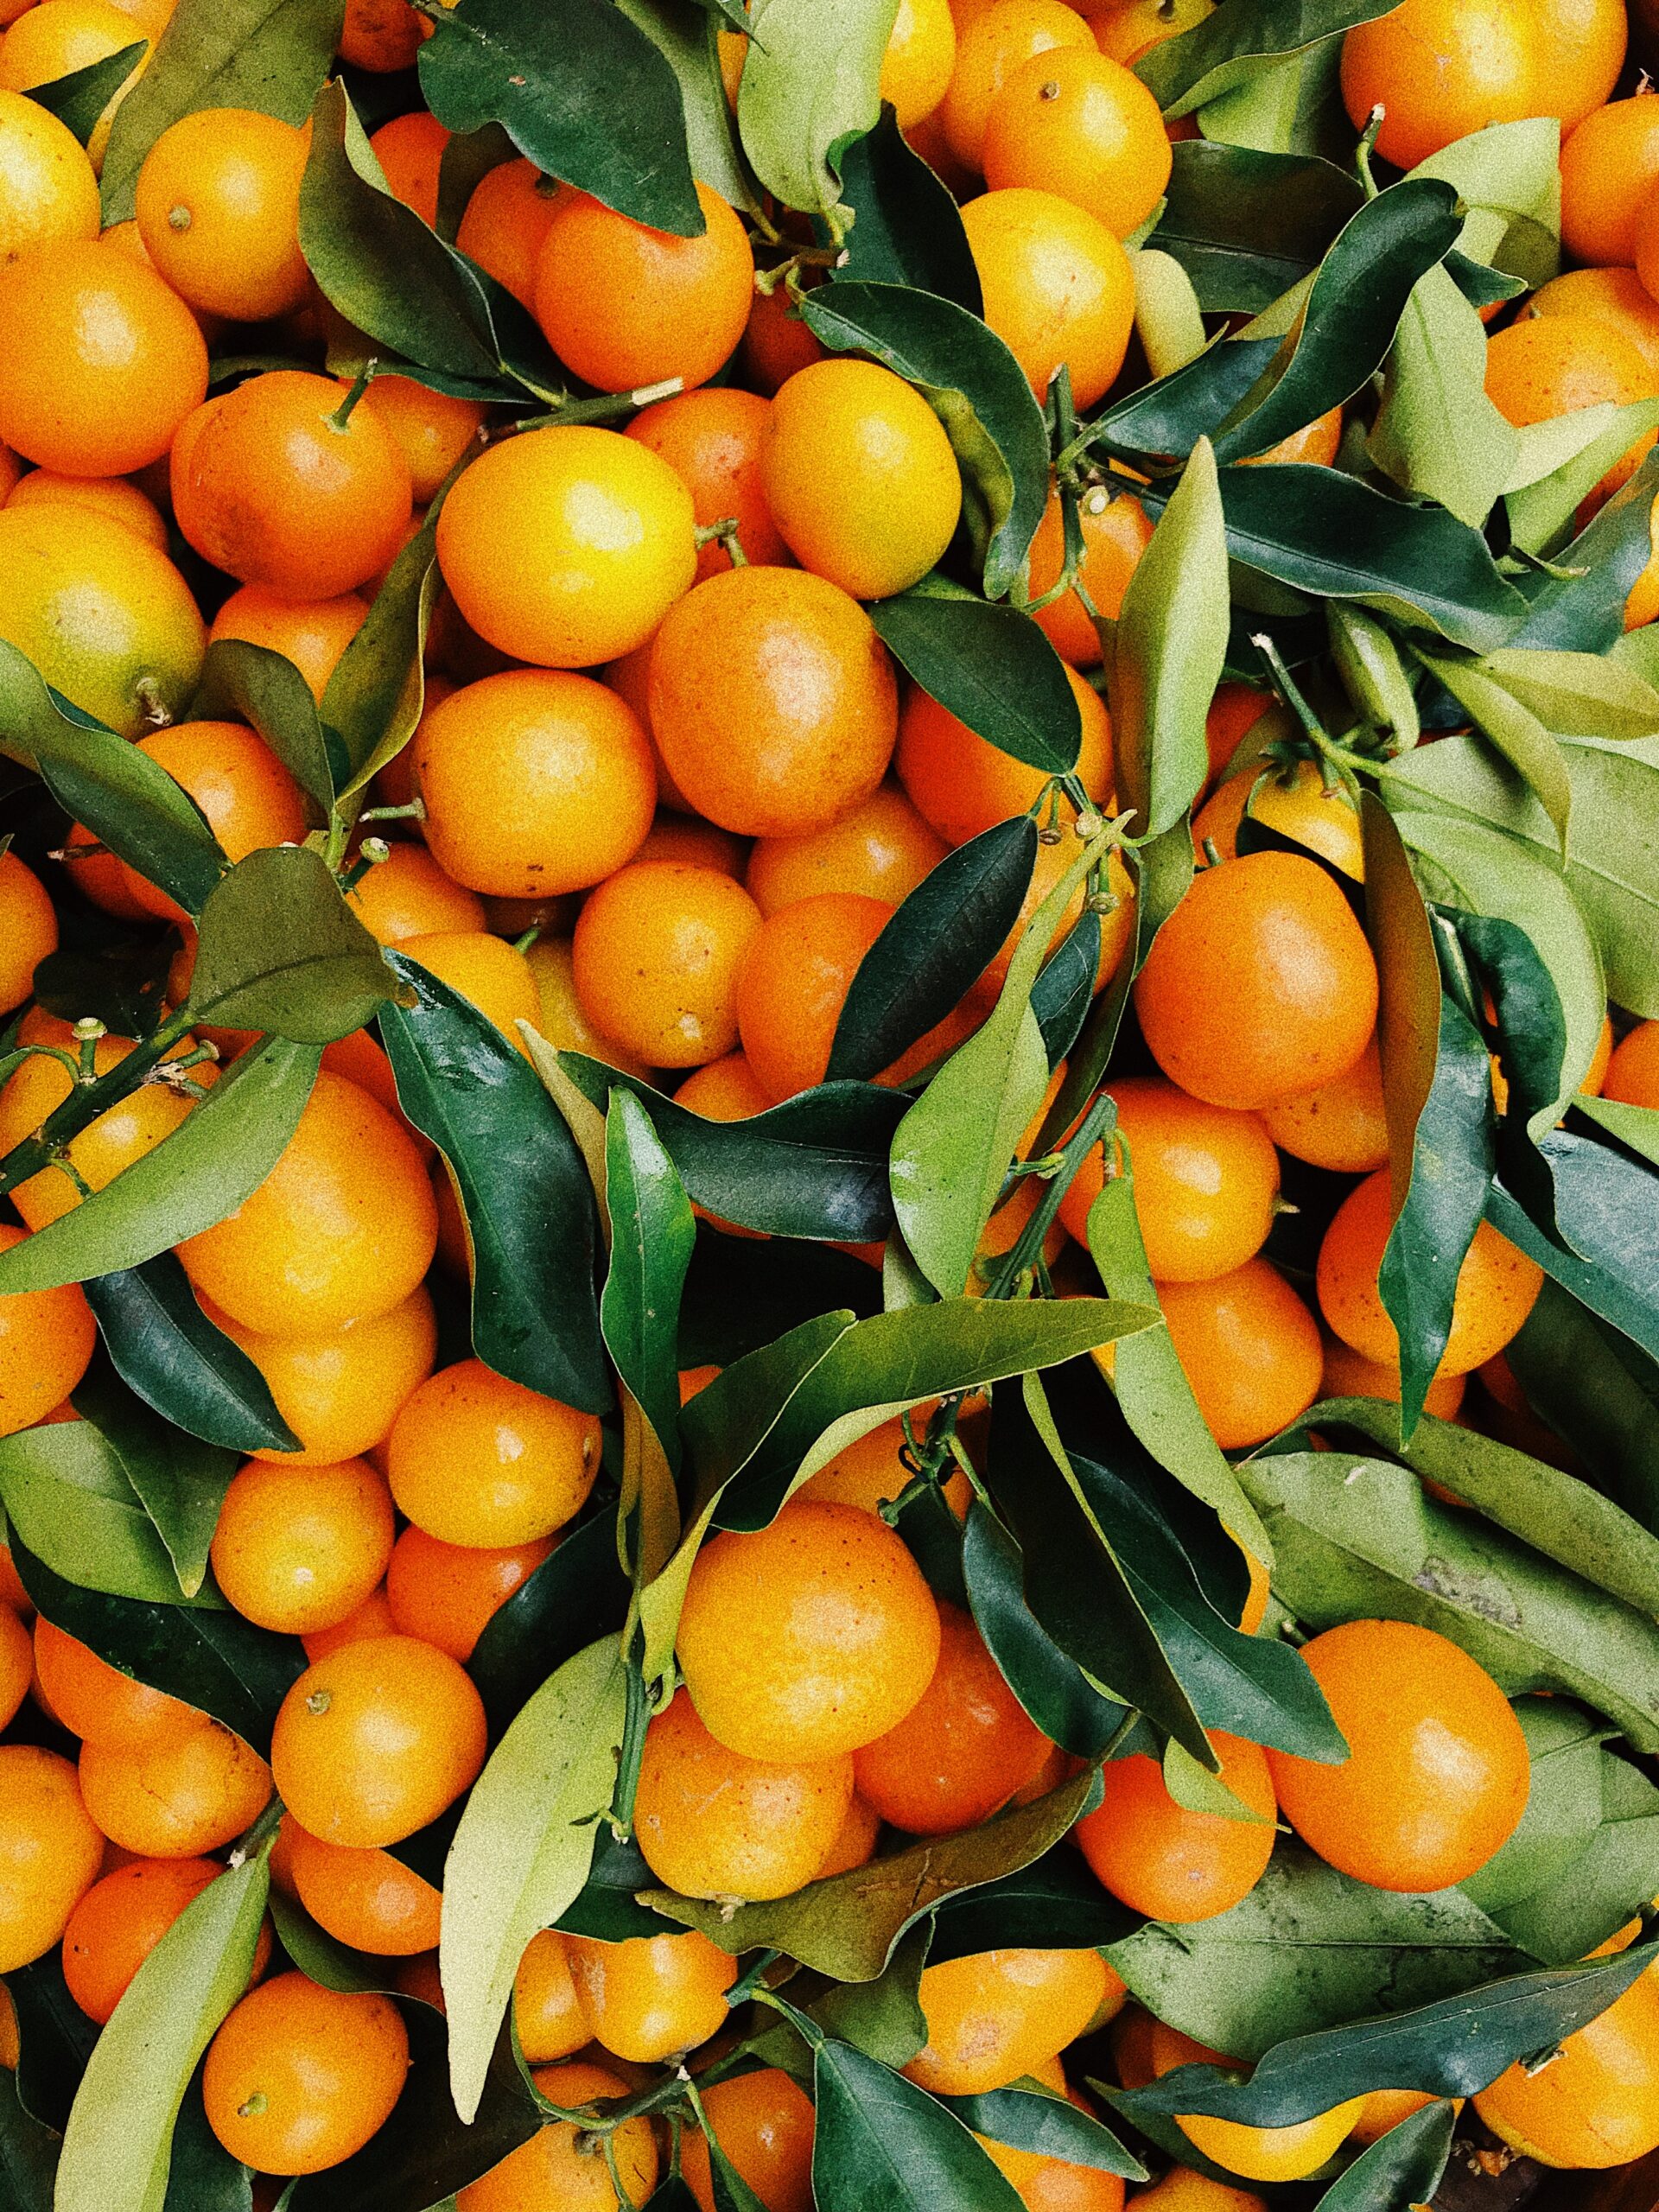 San Valentín en Italia se celebra con… ¿naranjas y limones?